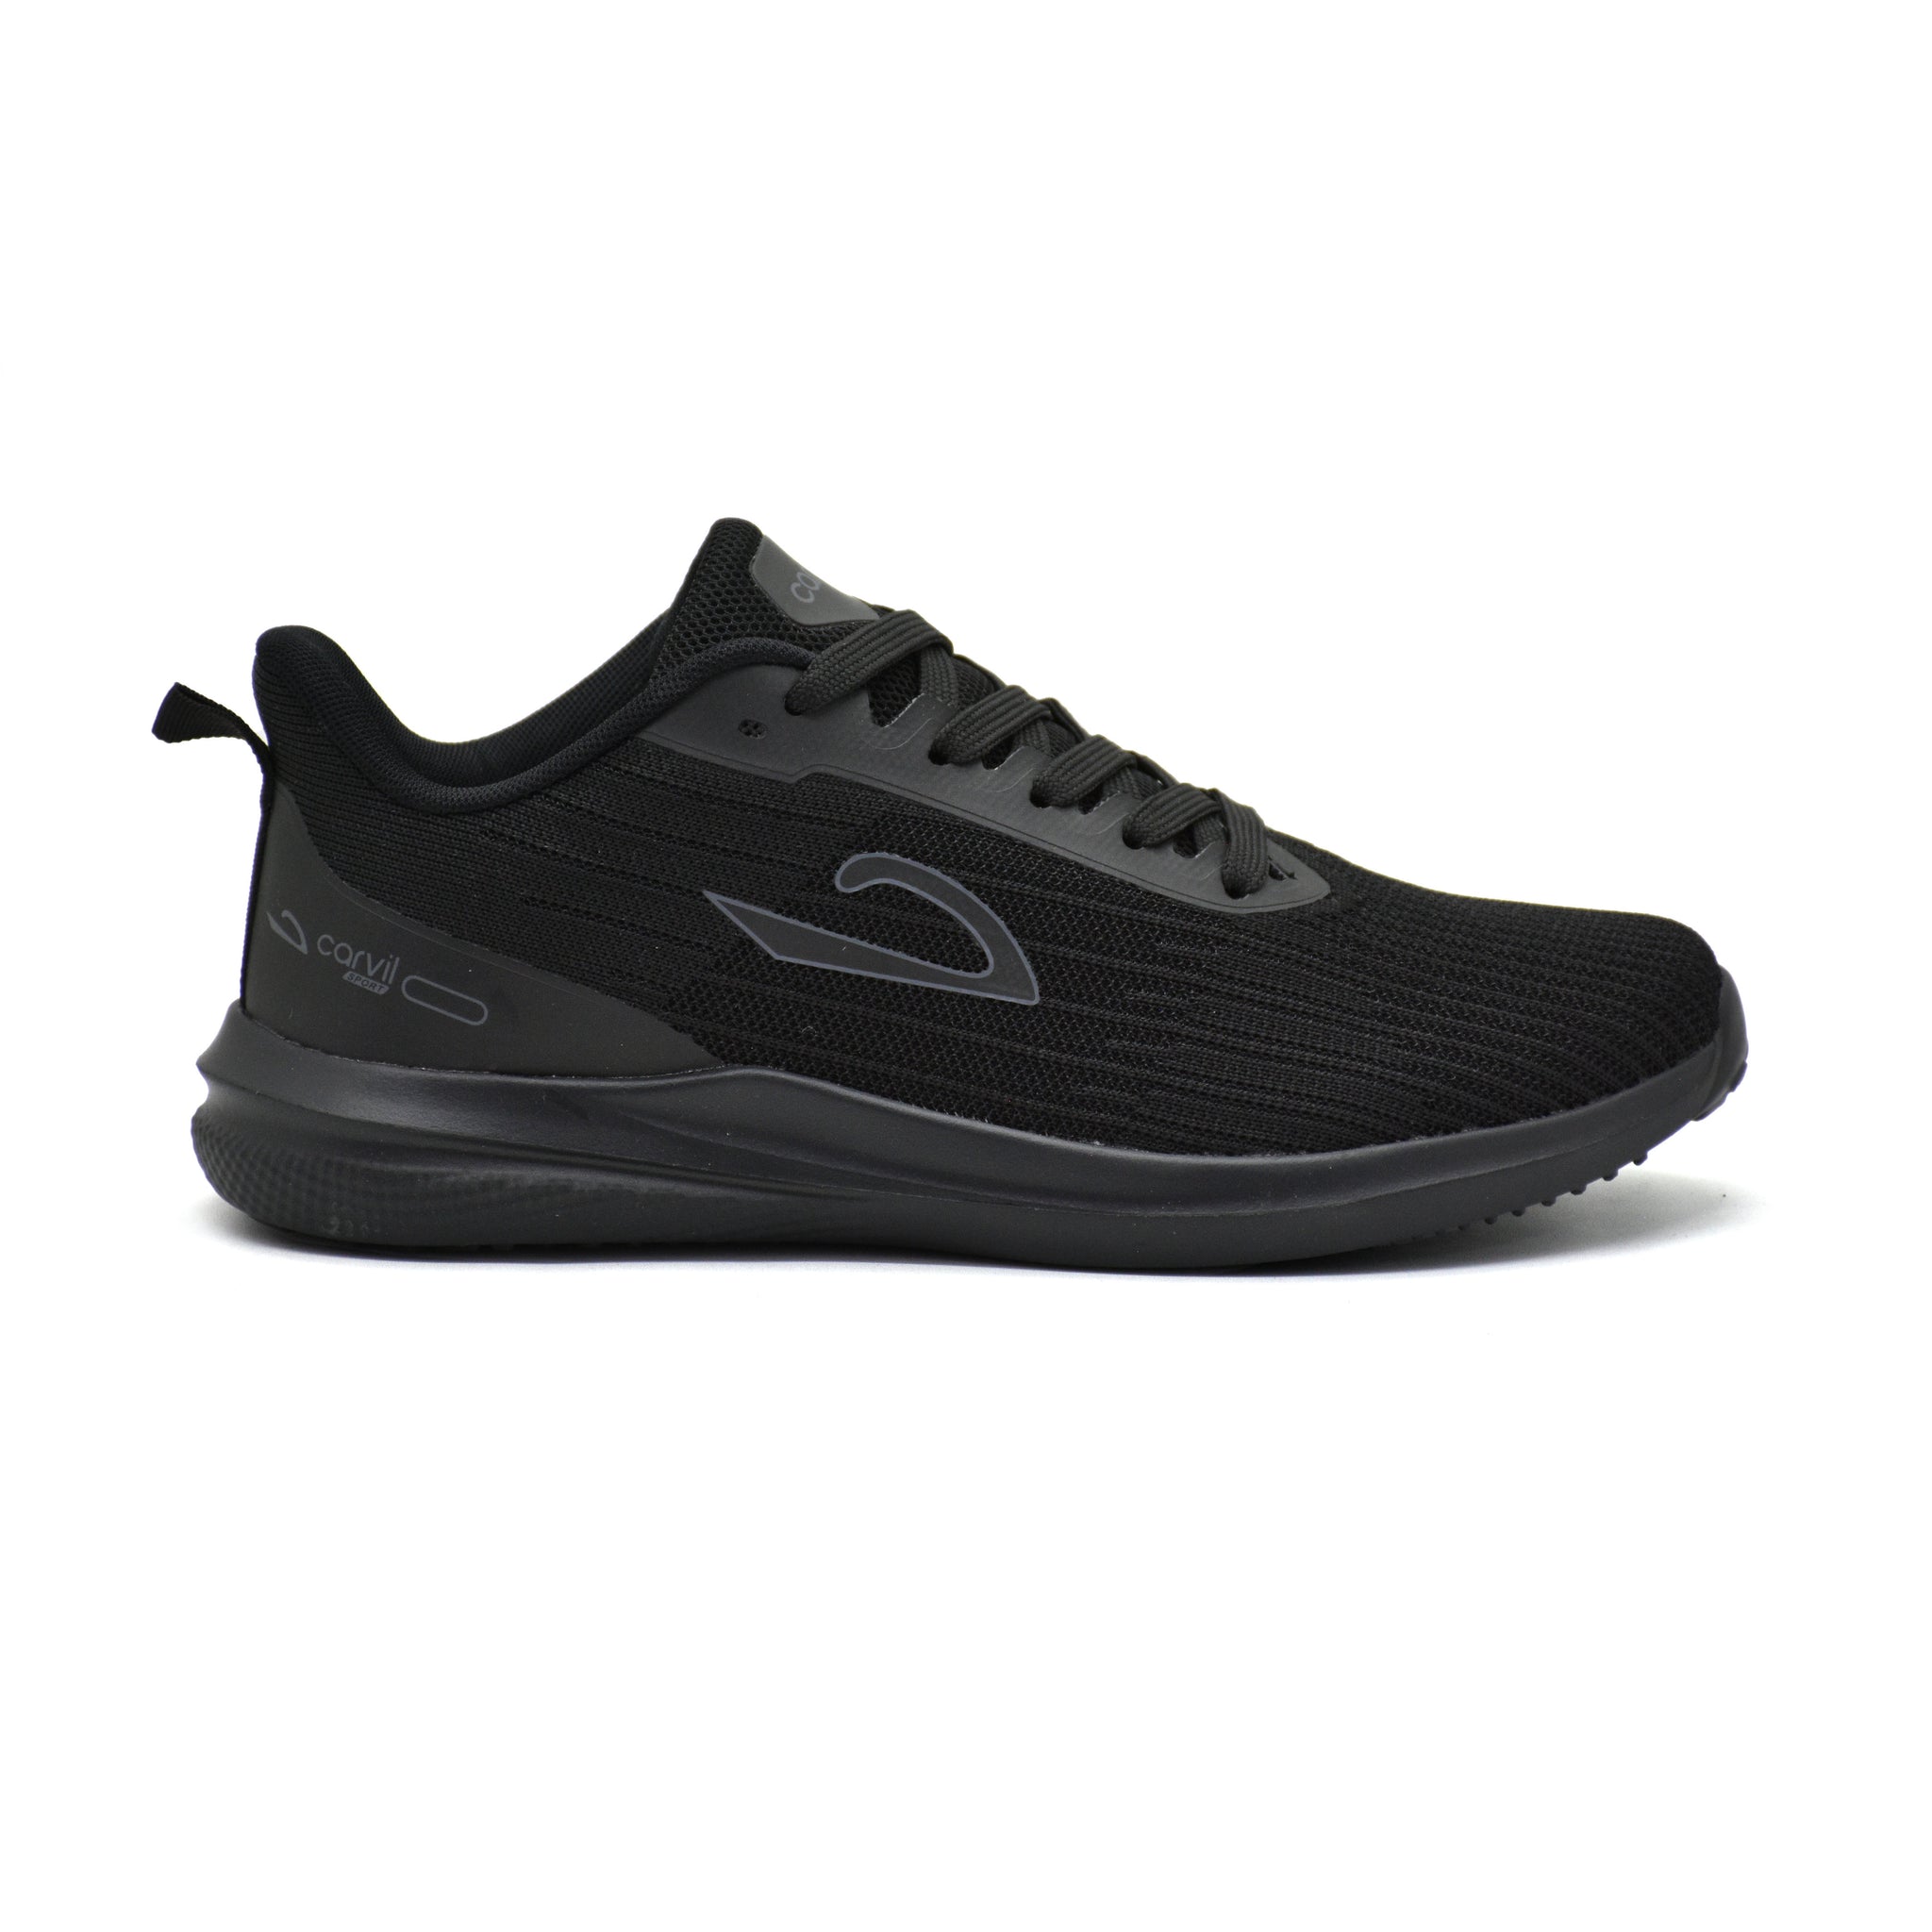 Carvil Sepatu Pria CLOVIS-SM BLACK/BLACK